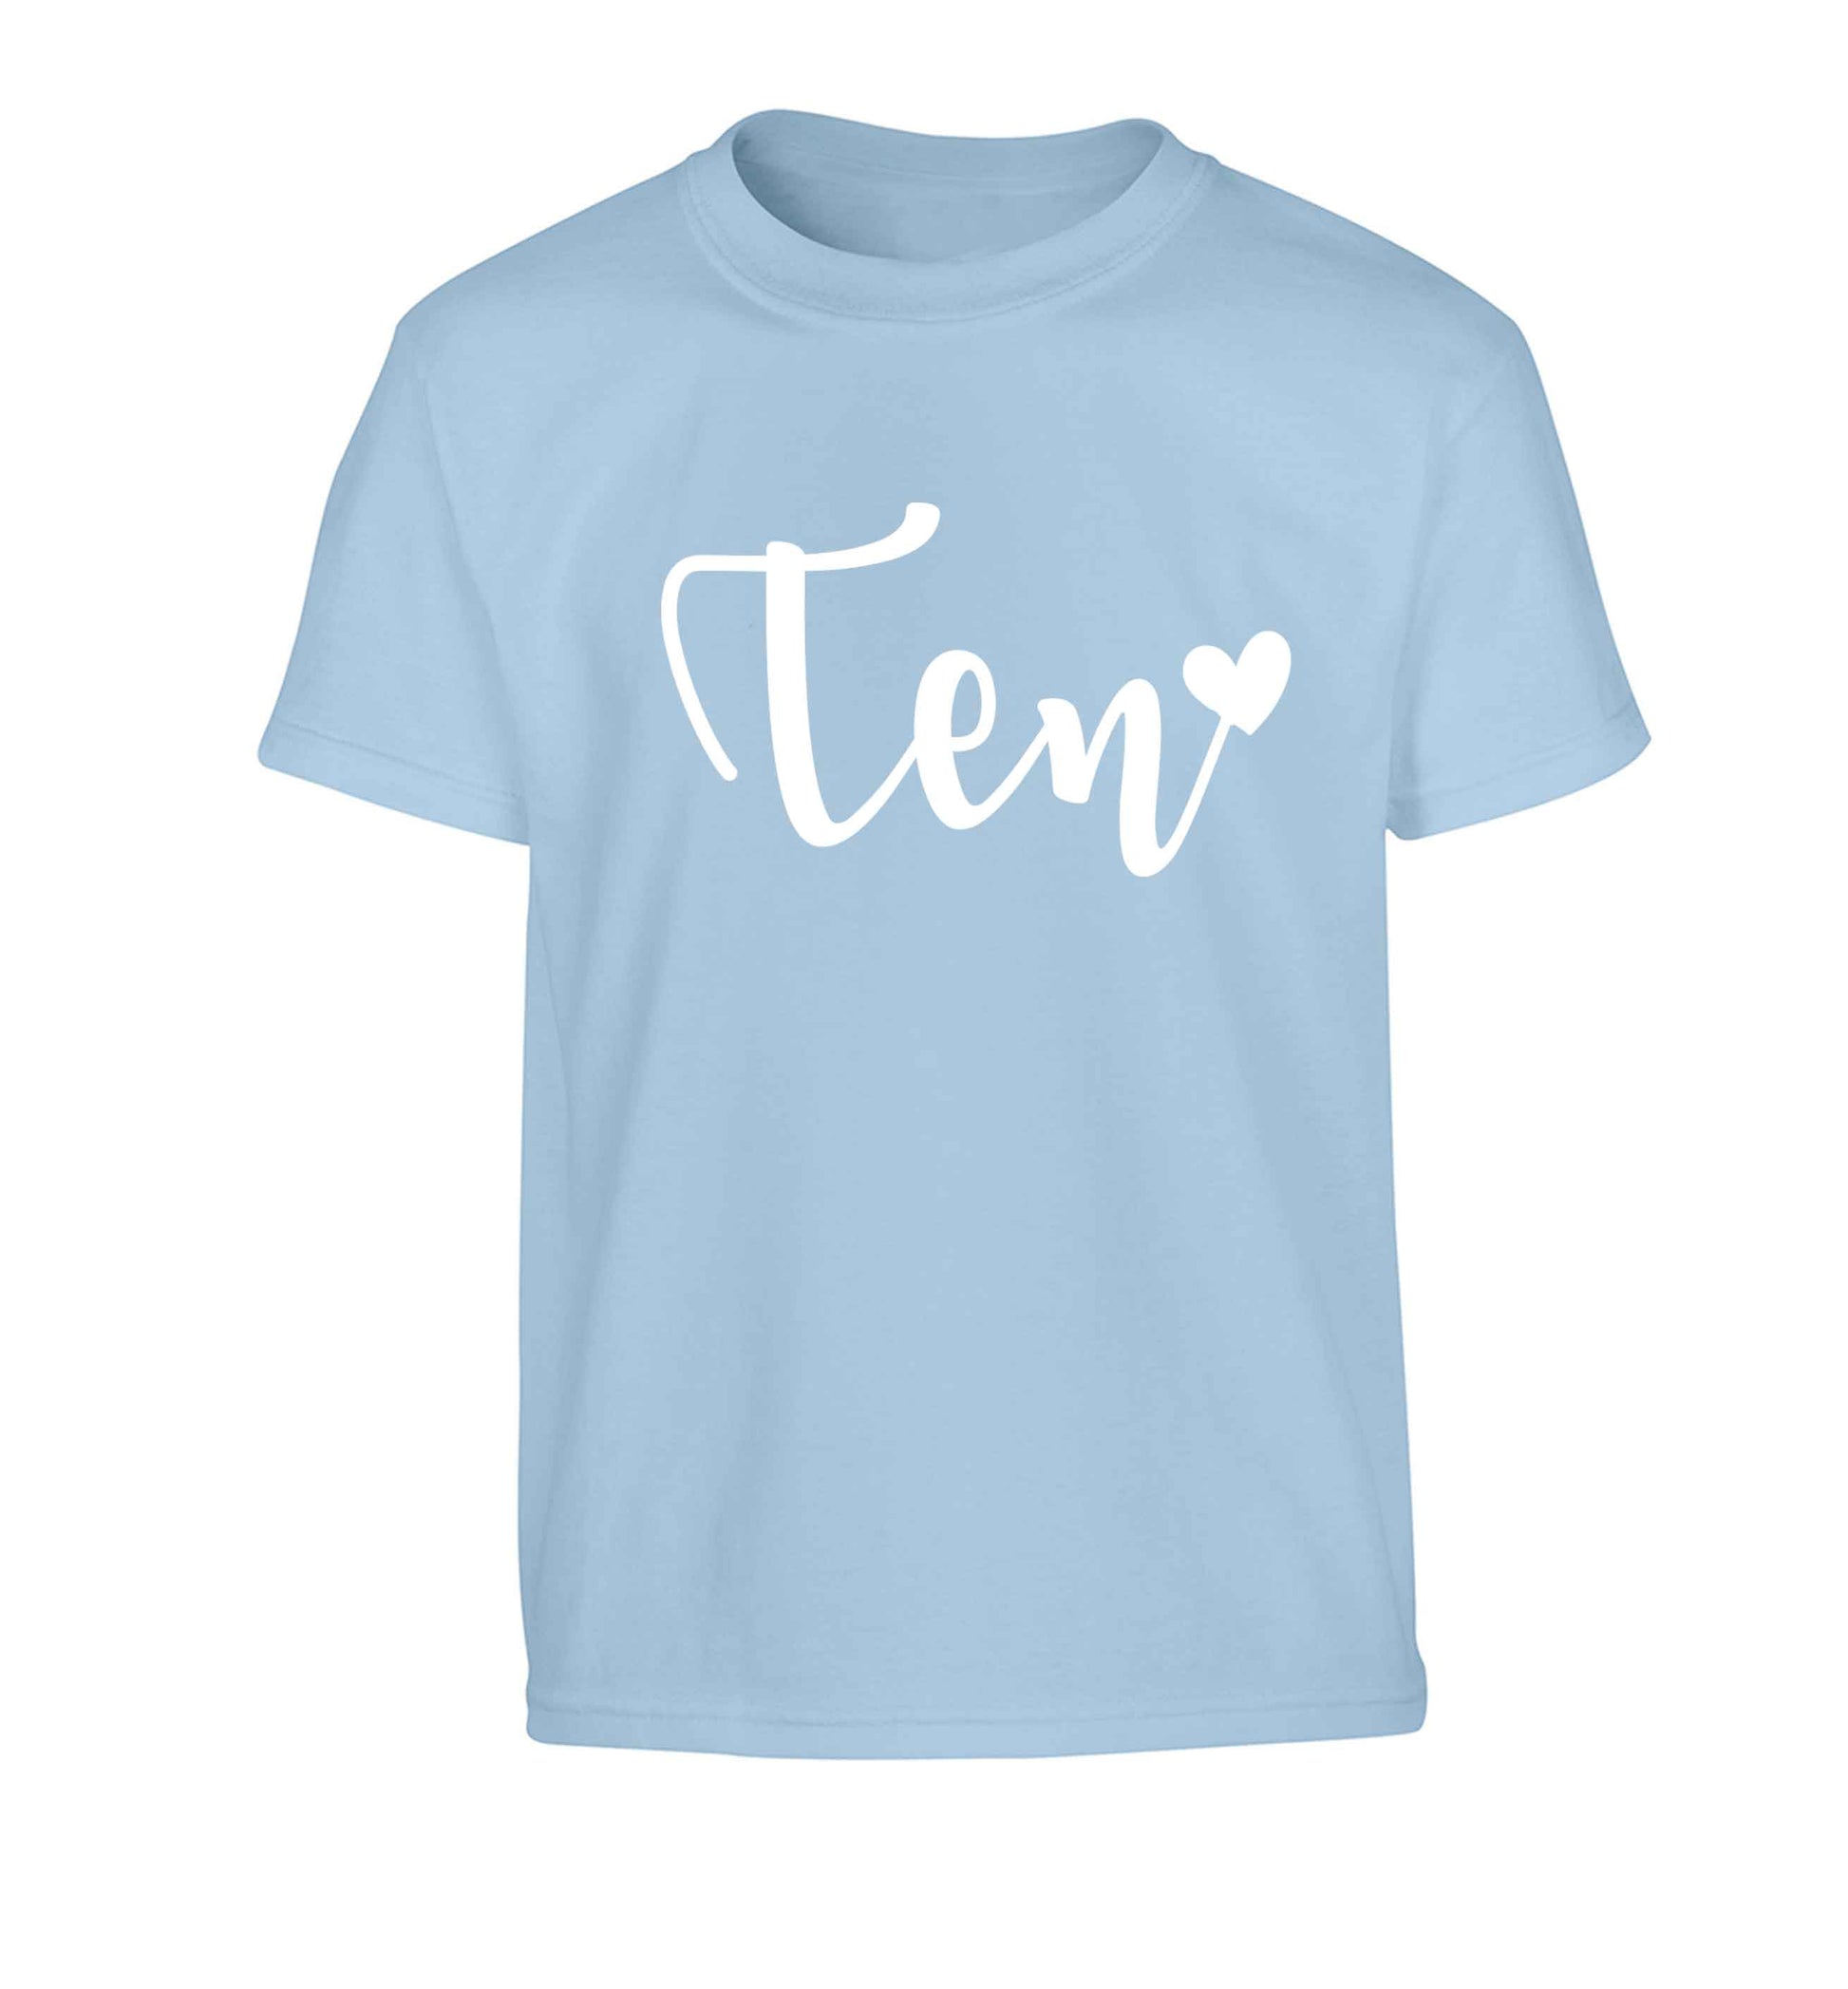 Ten and heart Children's light blue Tshirt 12-13 Years